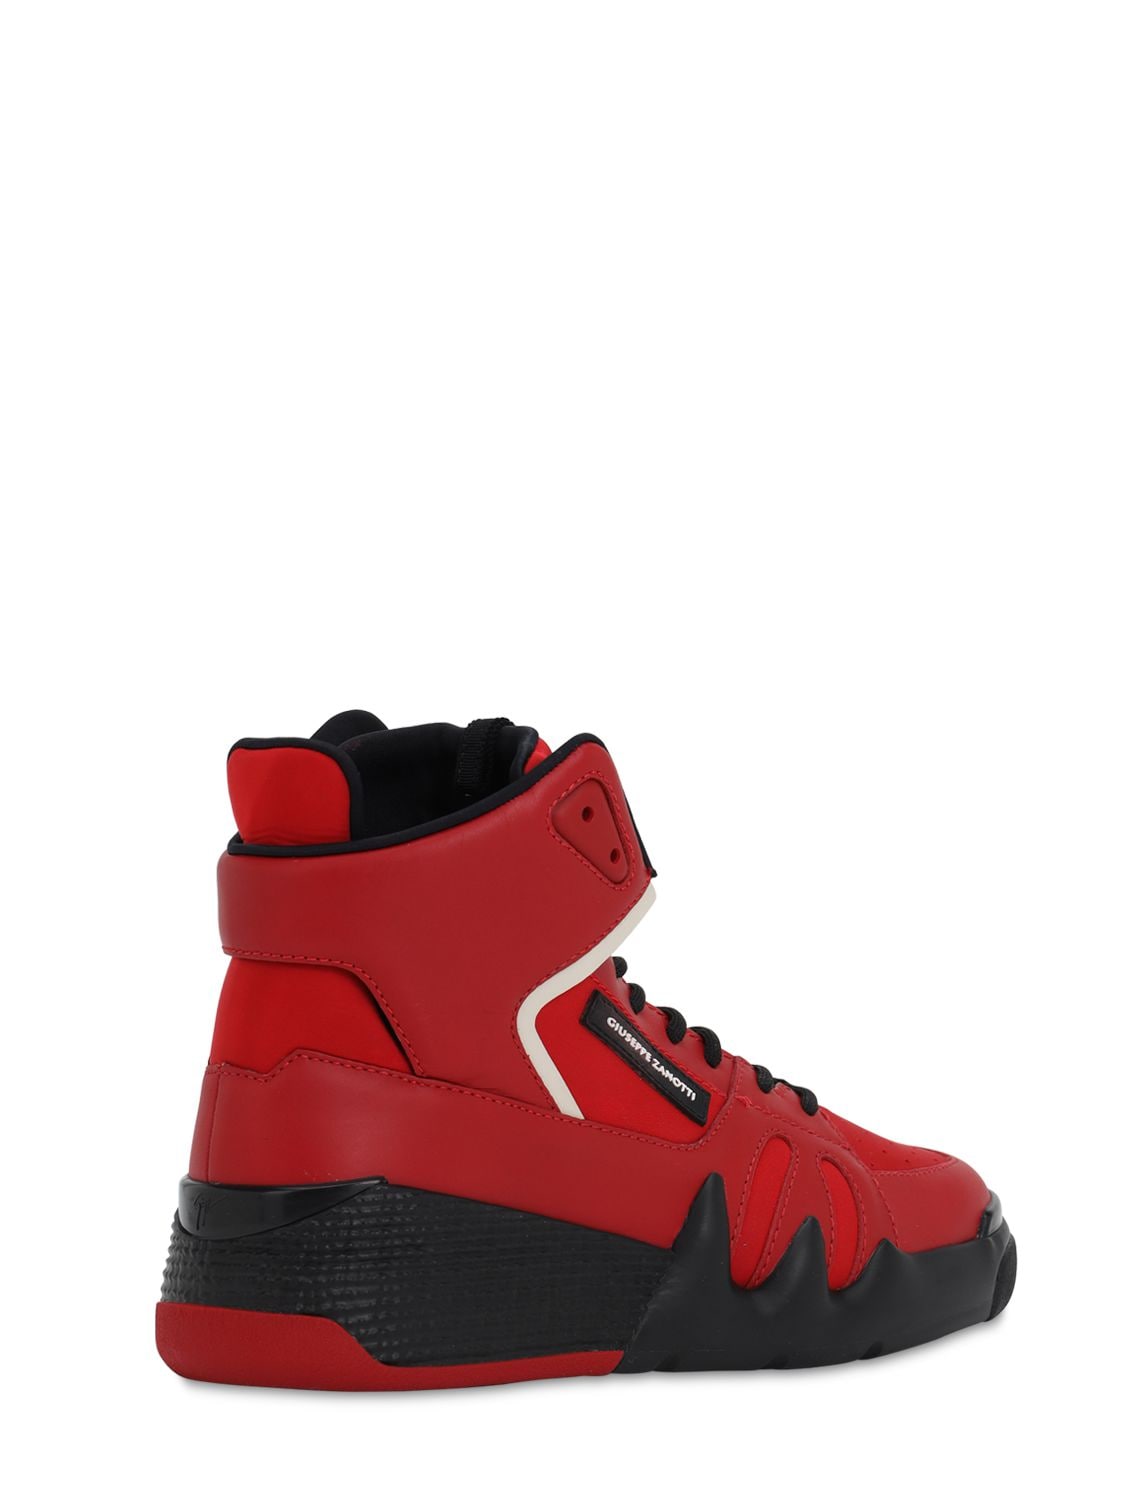 Giuseppe Zanotti Talon Leather & Scuba High Top Sneakers In Red | ModeSens